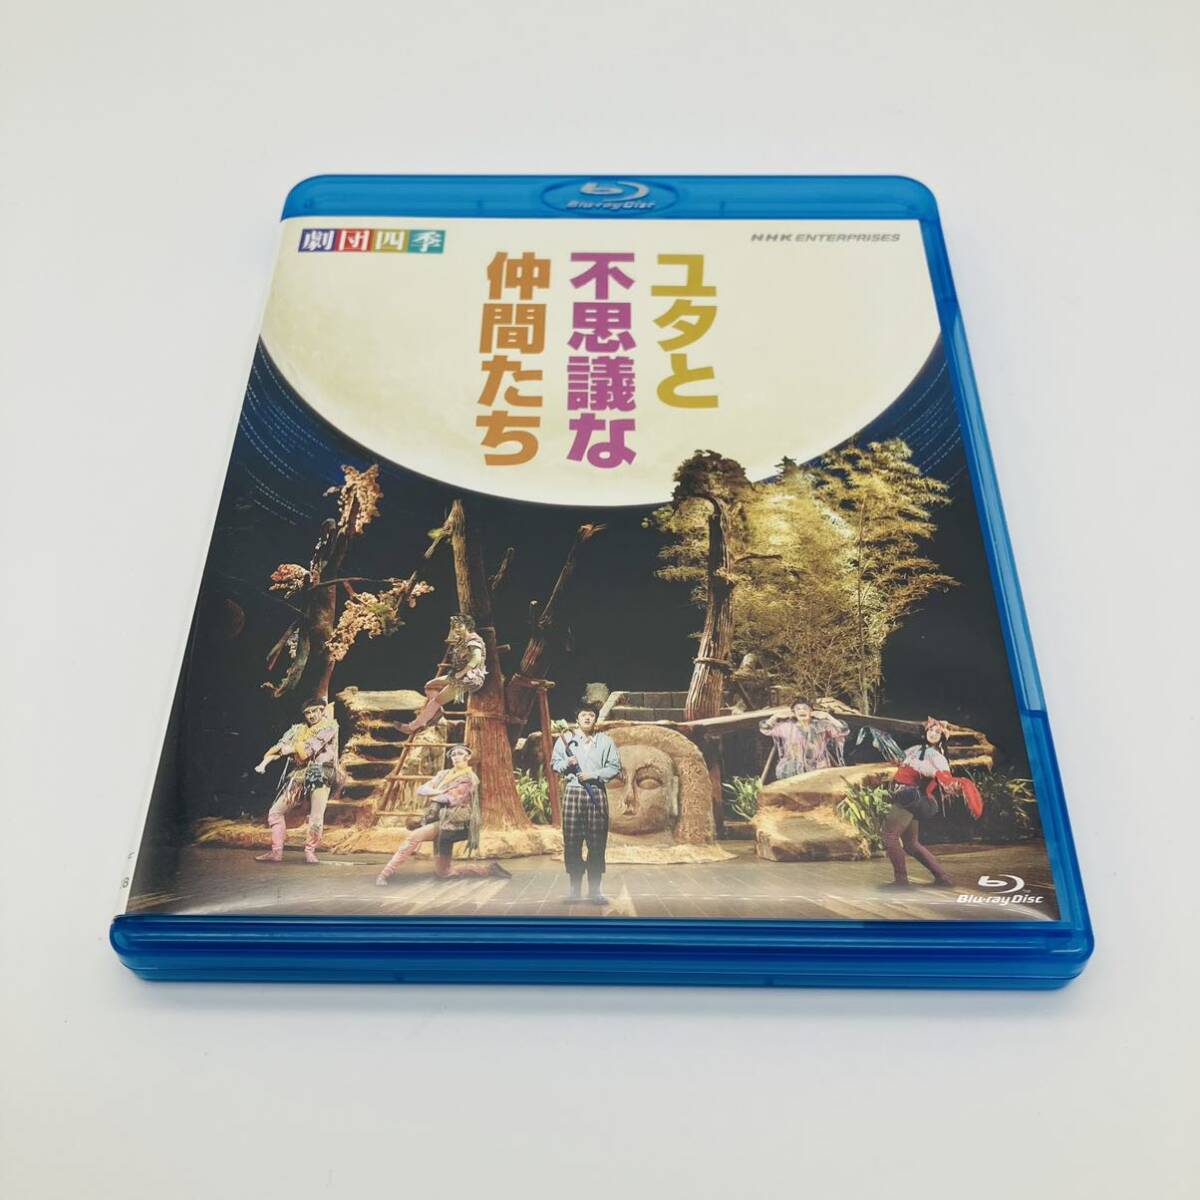 Blu-ray Shiki Theatre Company musical yuta. mystery . company .. Blue-ray postcard attaching Miura Tetsuo . profit . futoshi NHKenta- prize NSBS-16828